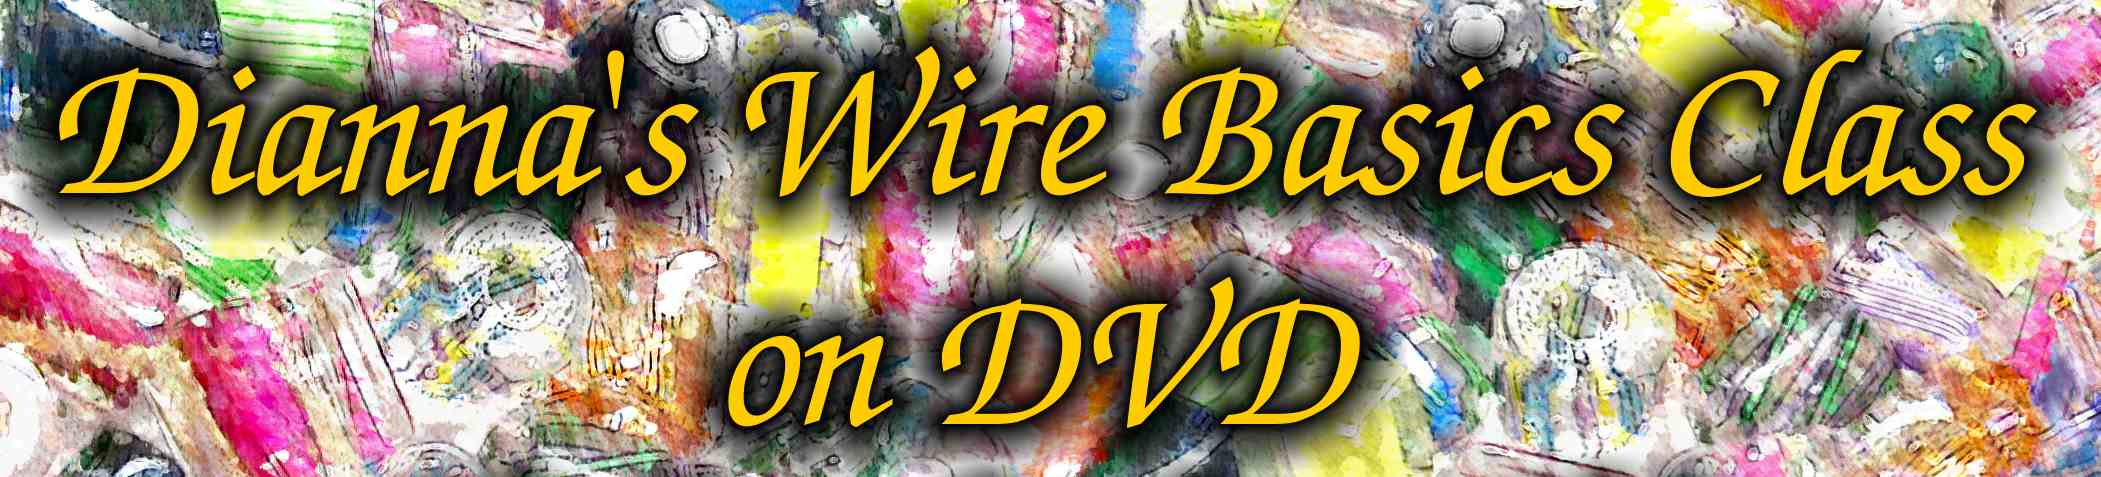 Dianna's Wire Basics Class DVD title